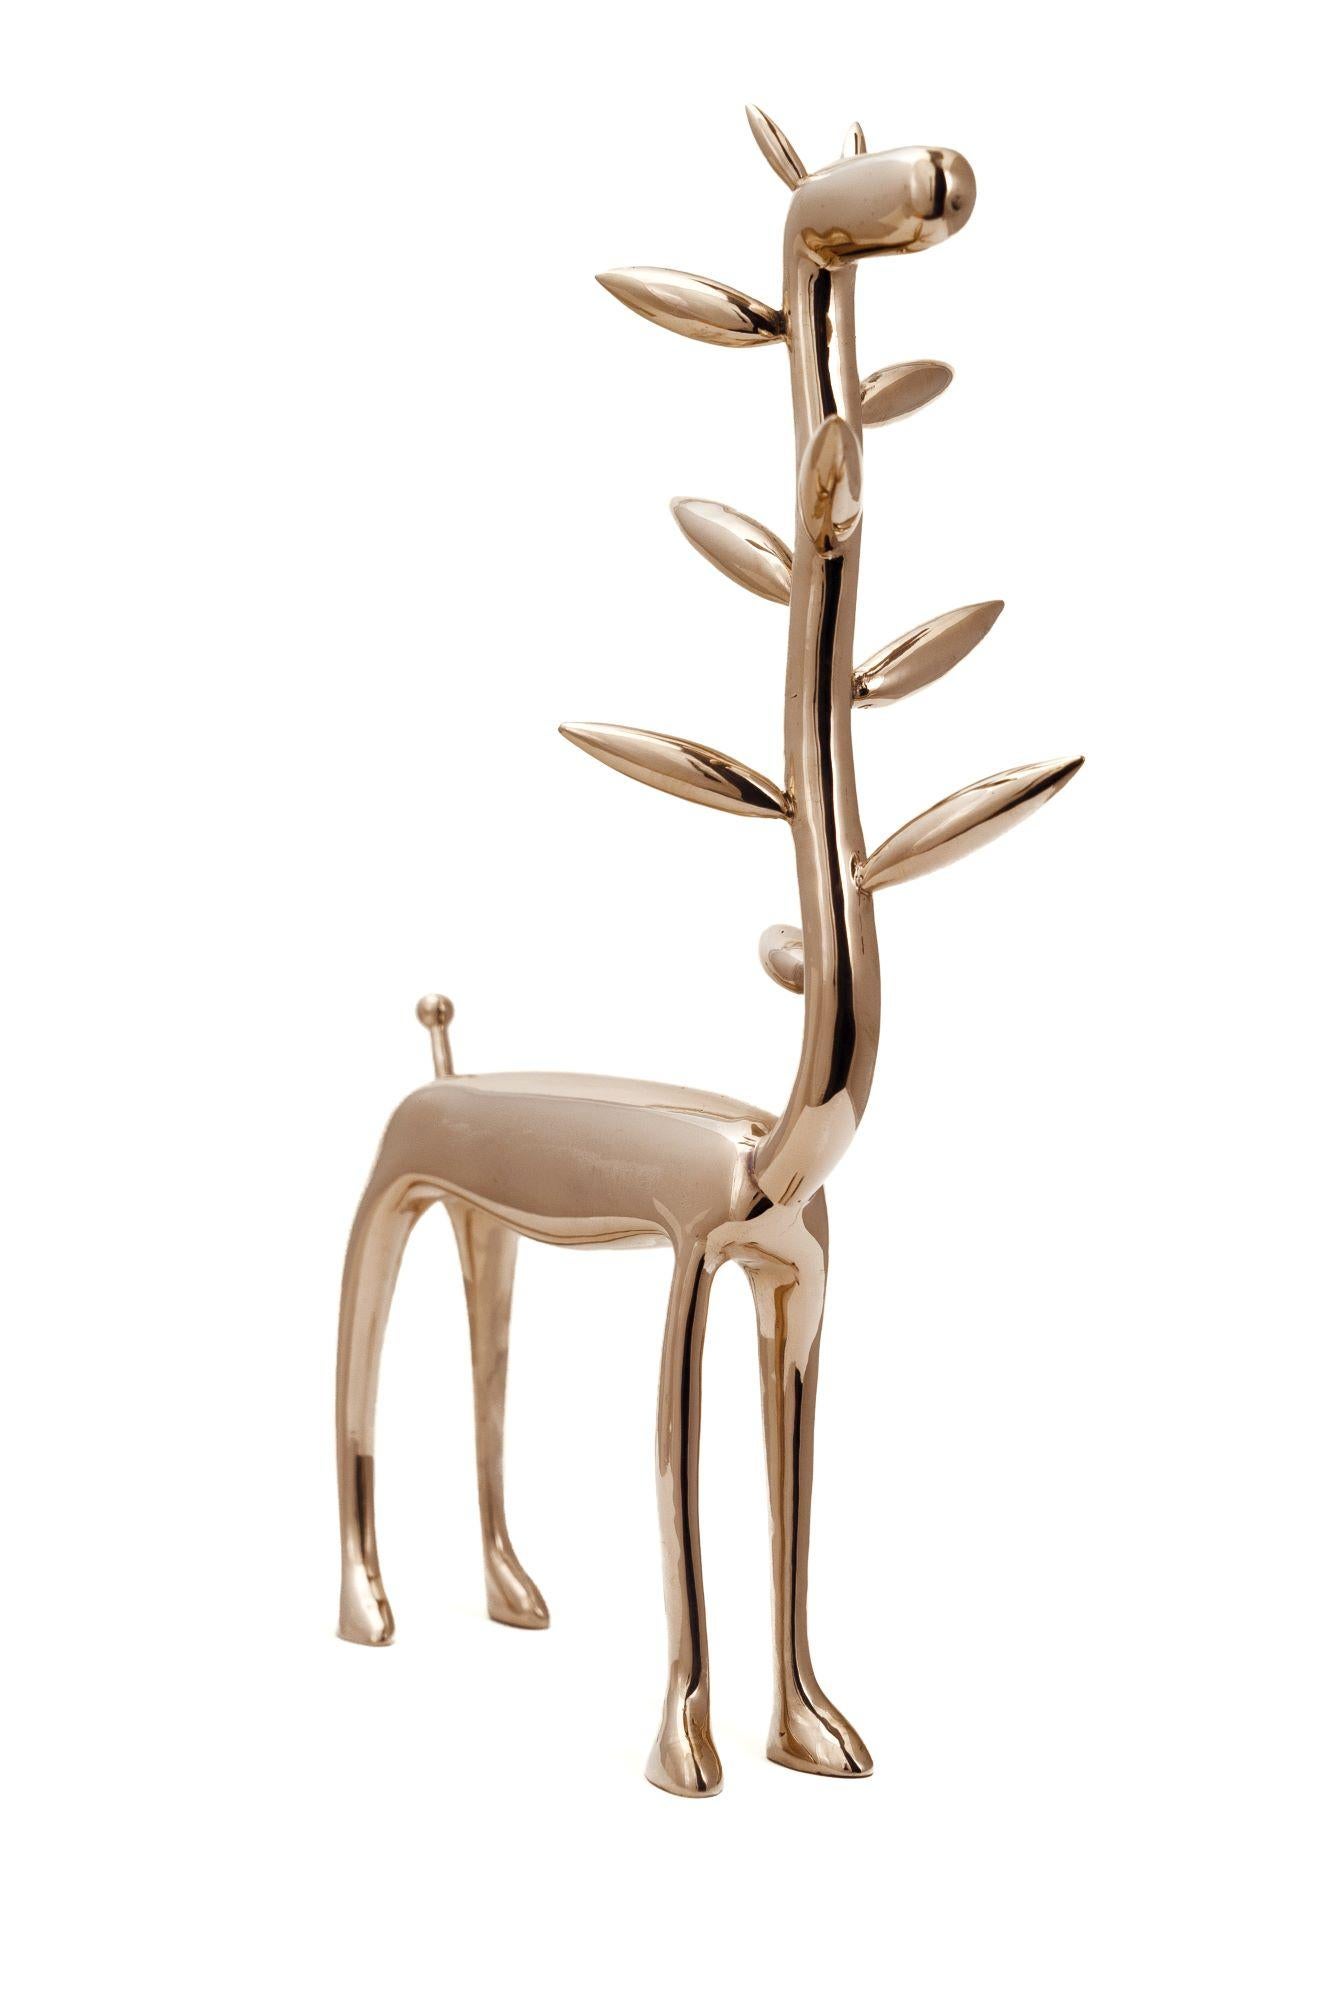 Plantiraffe by Marcelo M. Burgos - polished bronze sculpture, golden, giraffe For Sale 3